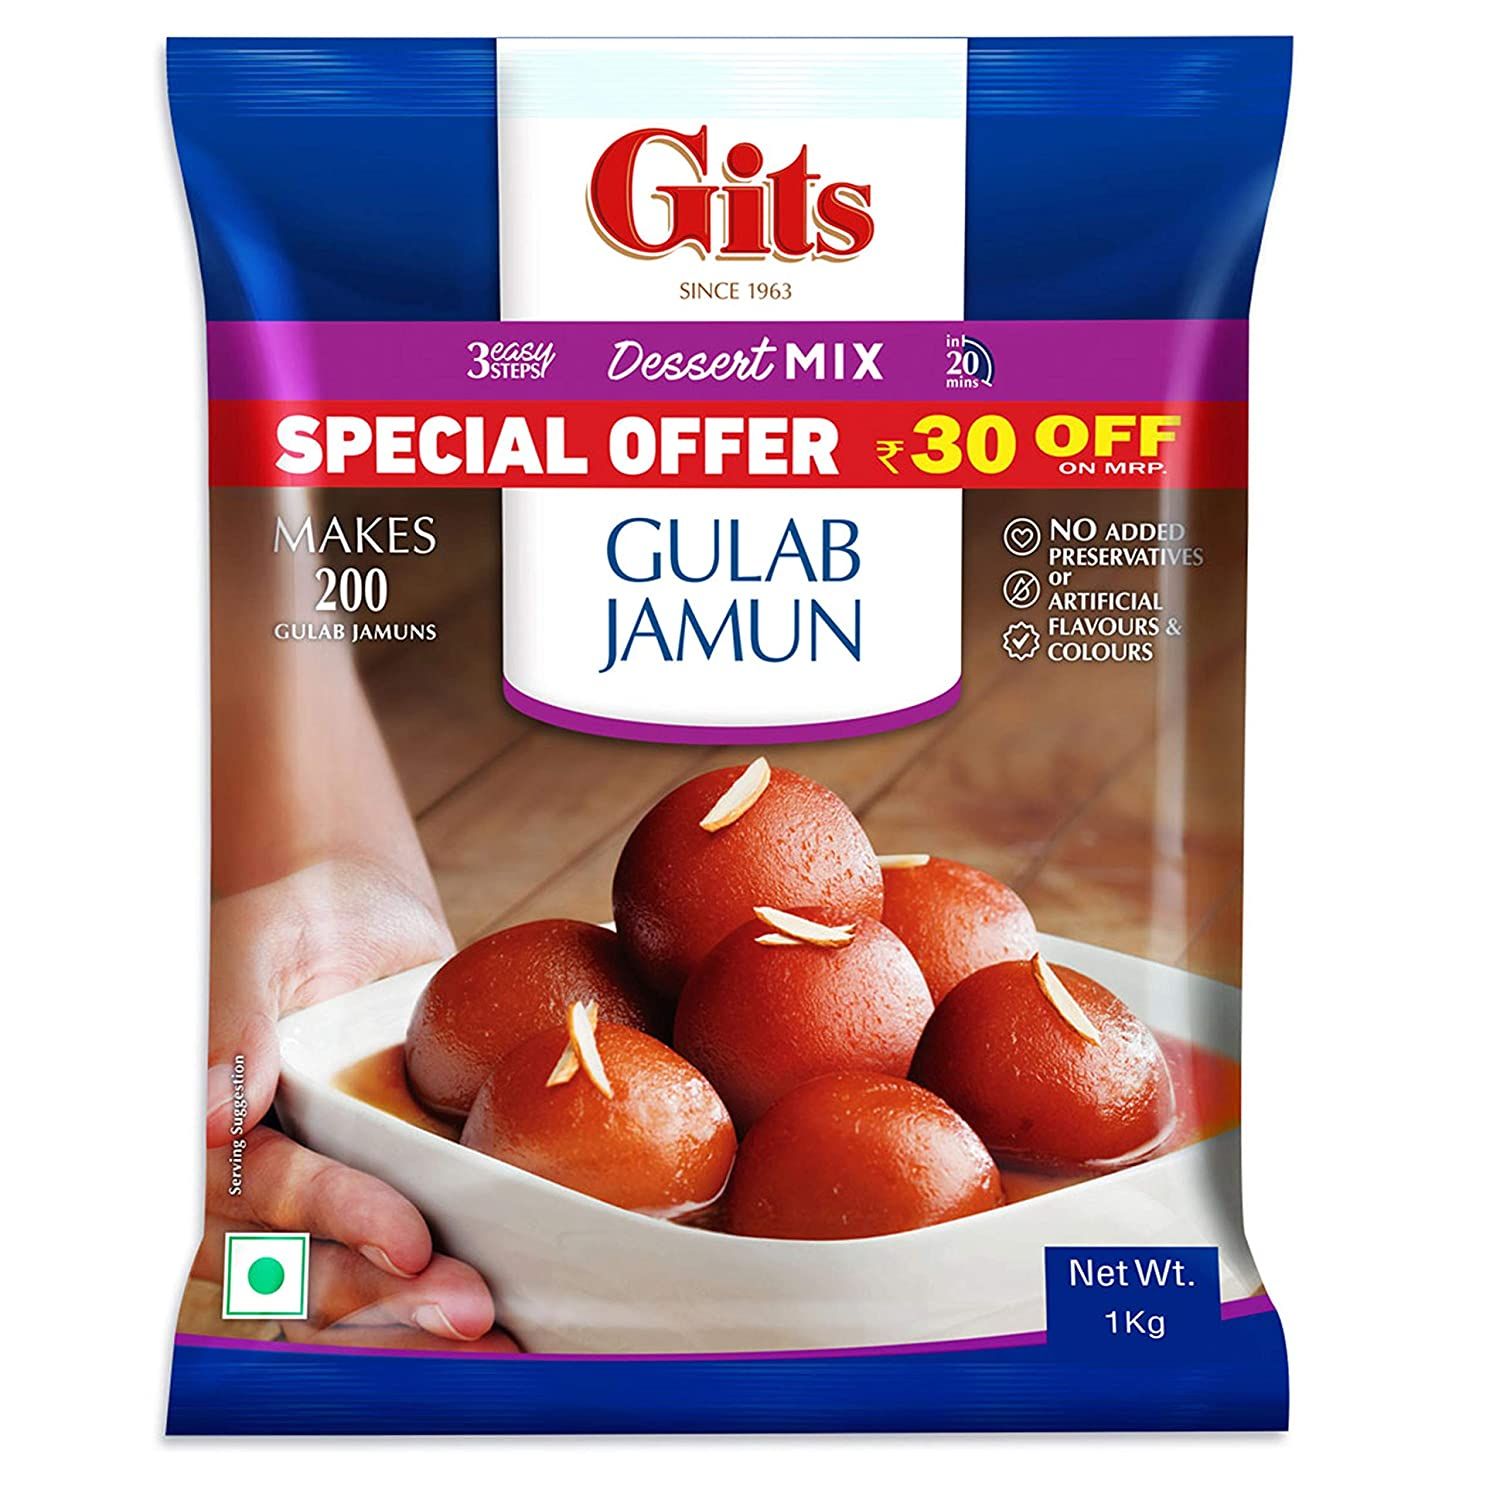 Gits Instant Gulab Jamun Dessert Mix Image